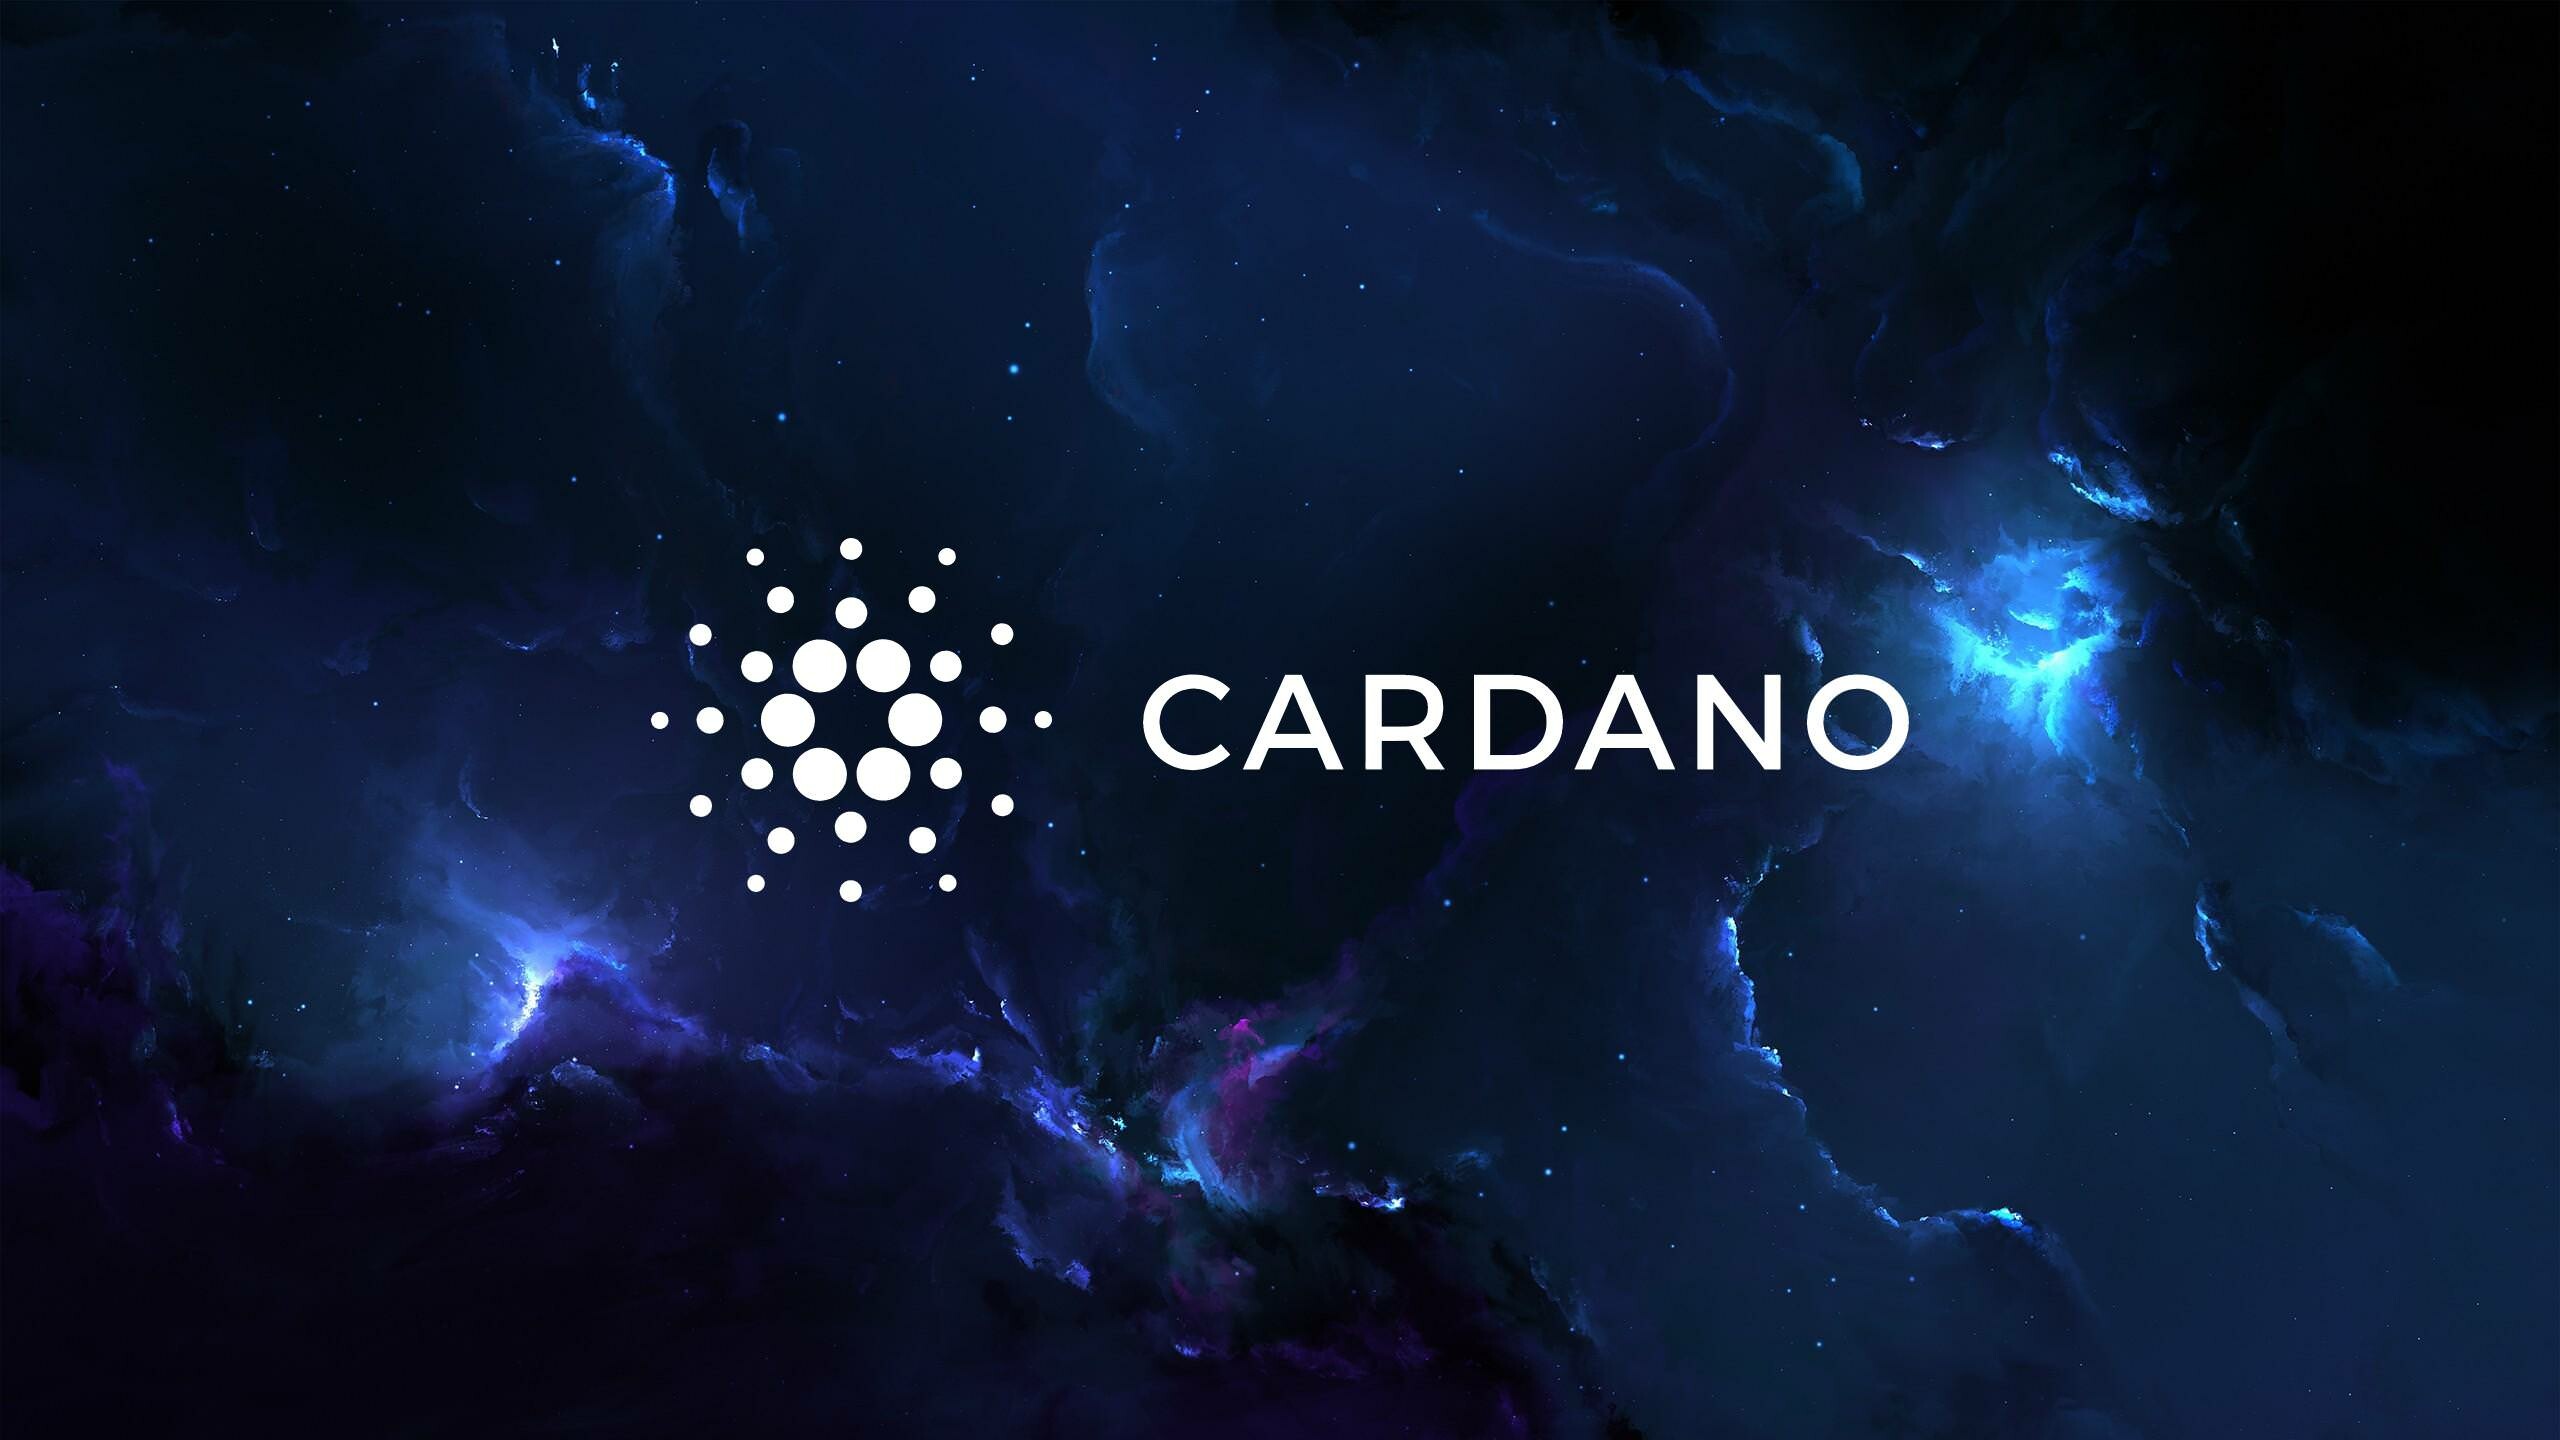 Cryptocurrency: Cardano, A public blockchain platform. 2560x1440 HD Wallpaper.